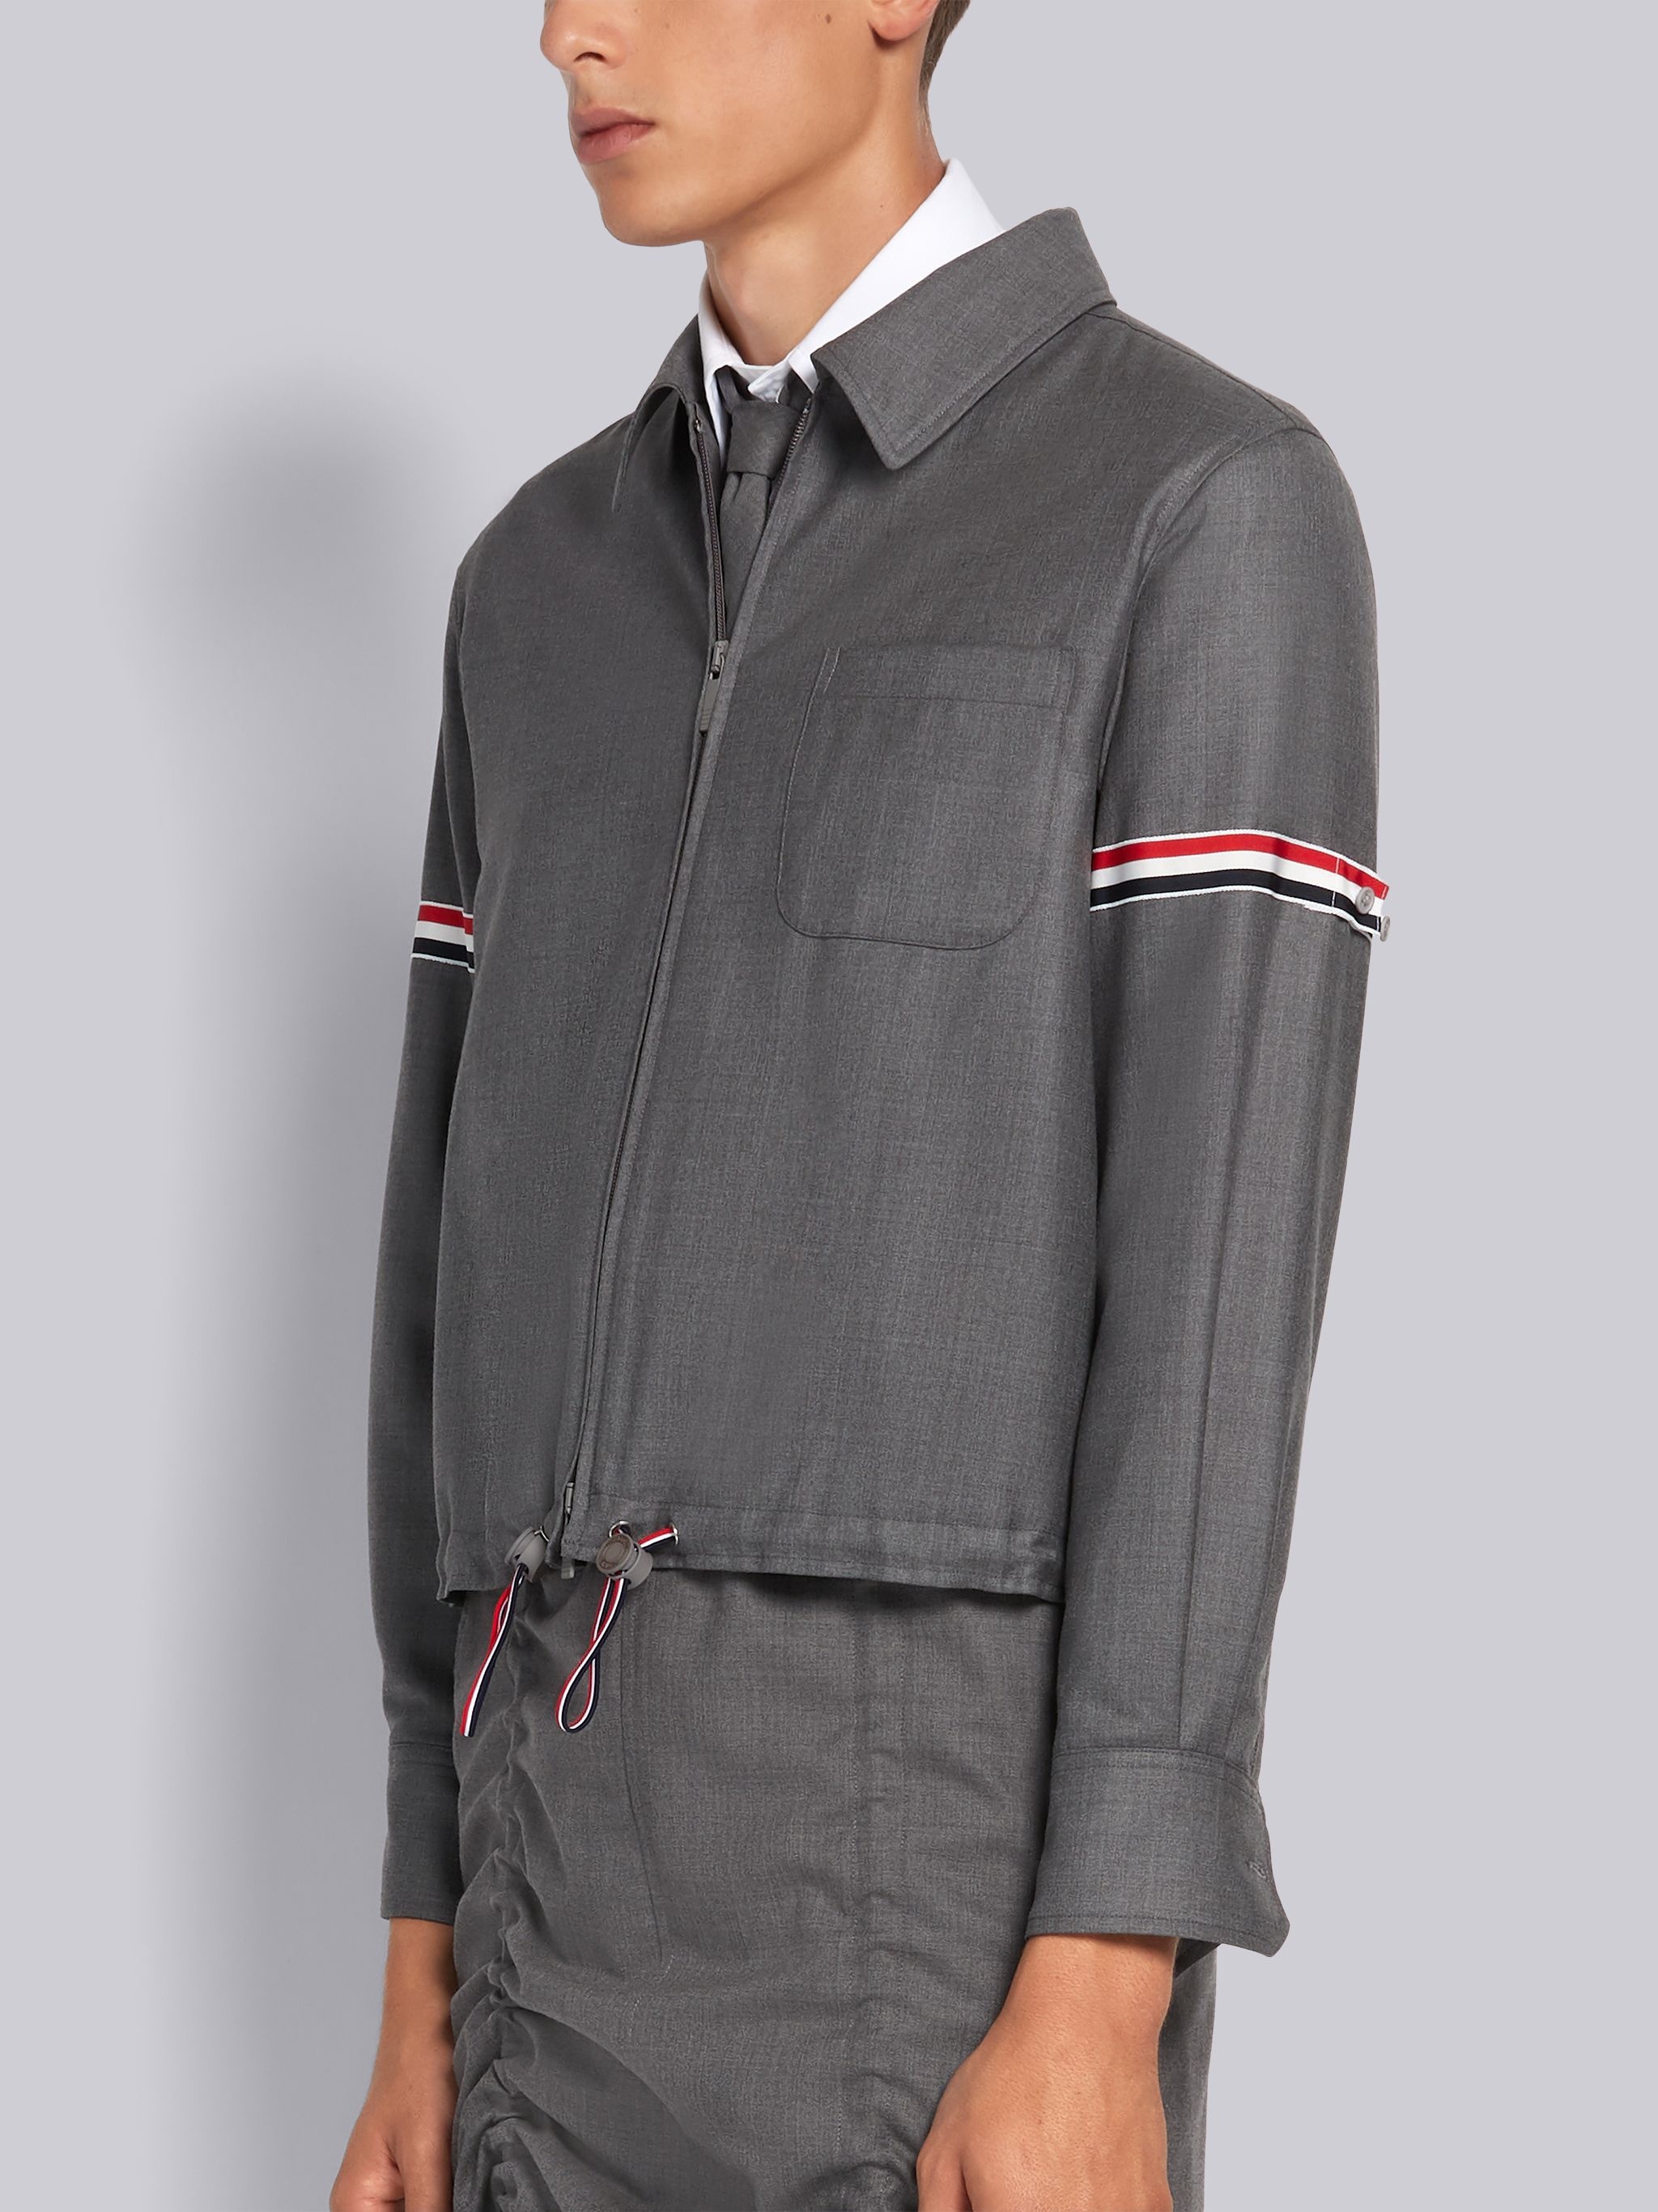 Medium Grey Super 120s Wool Twill Armband Zip-up Shirt Jacket - 2